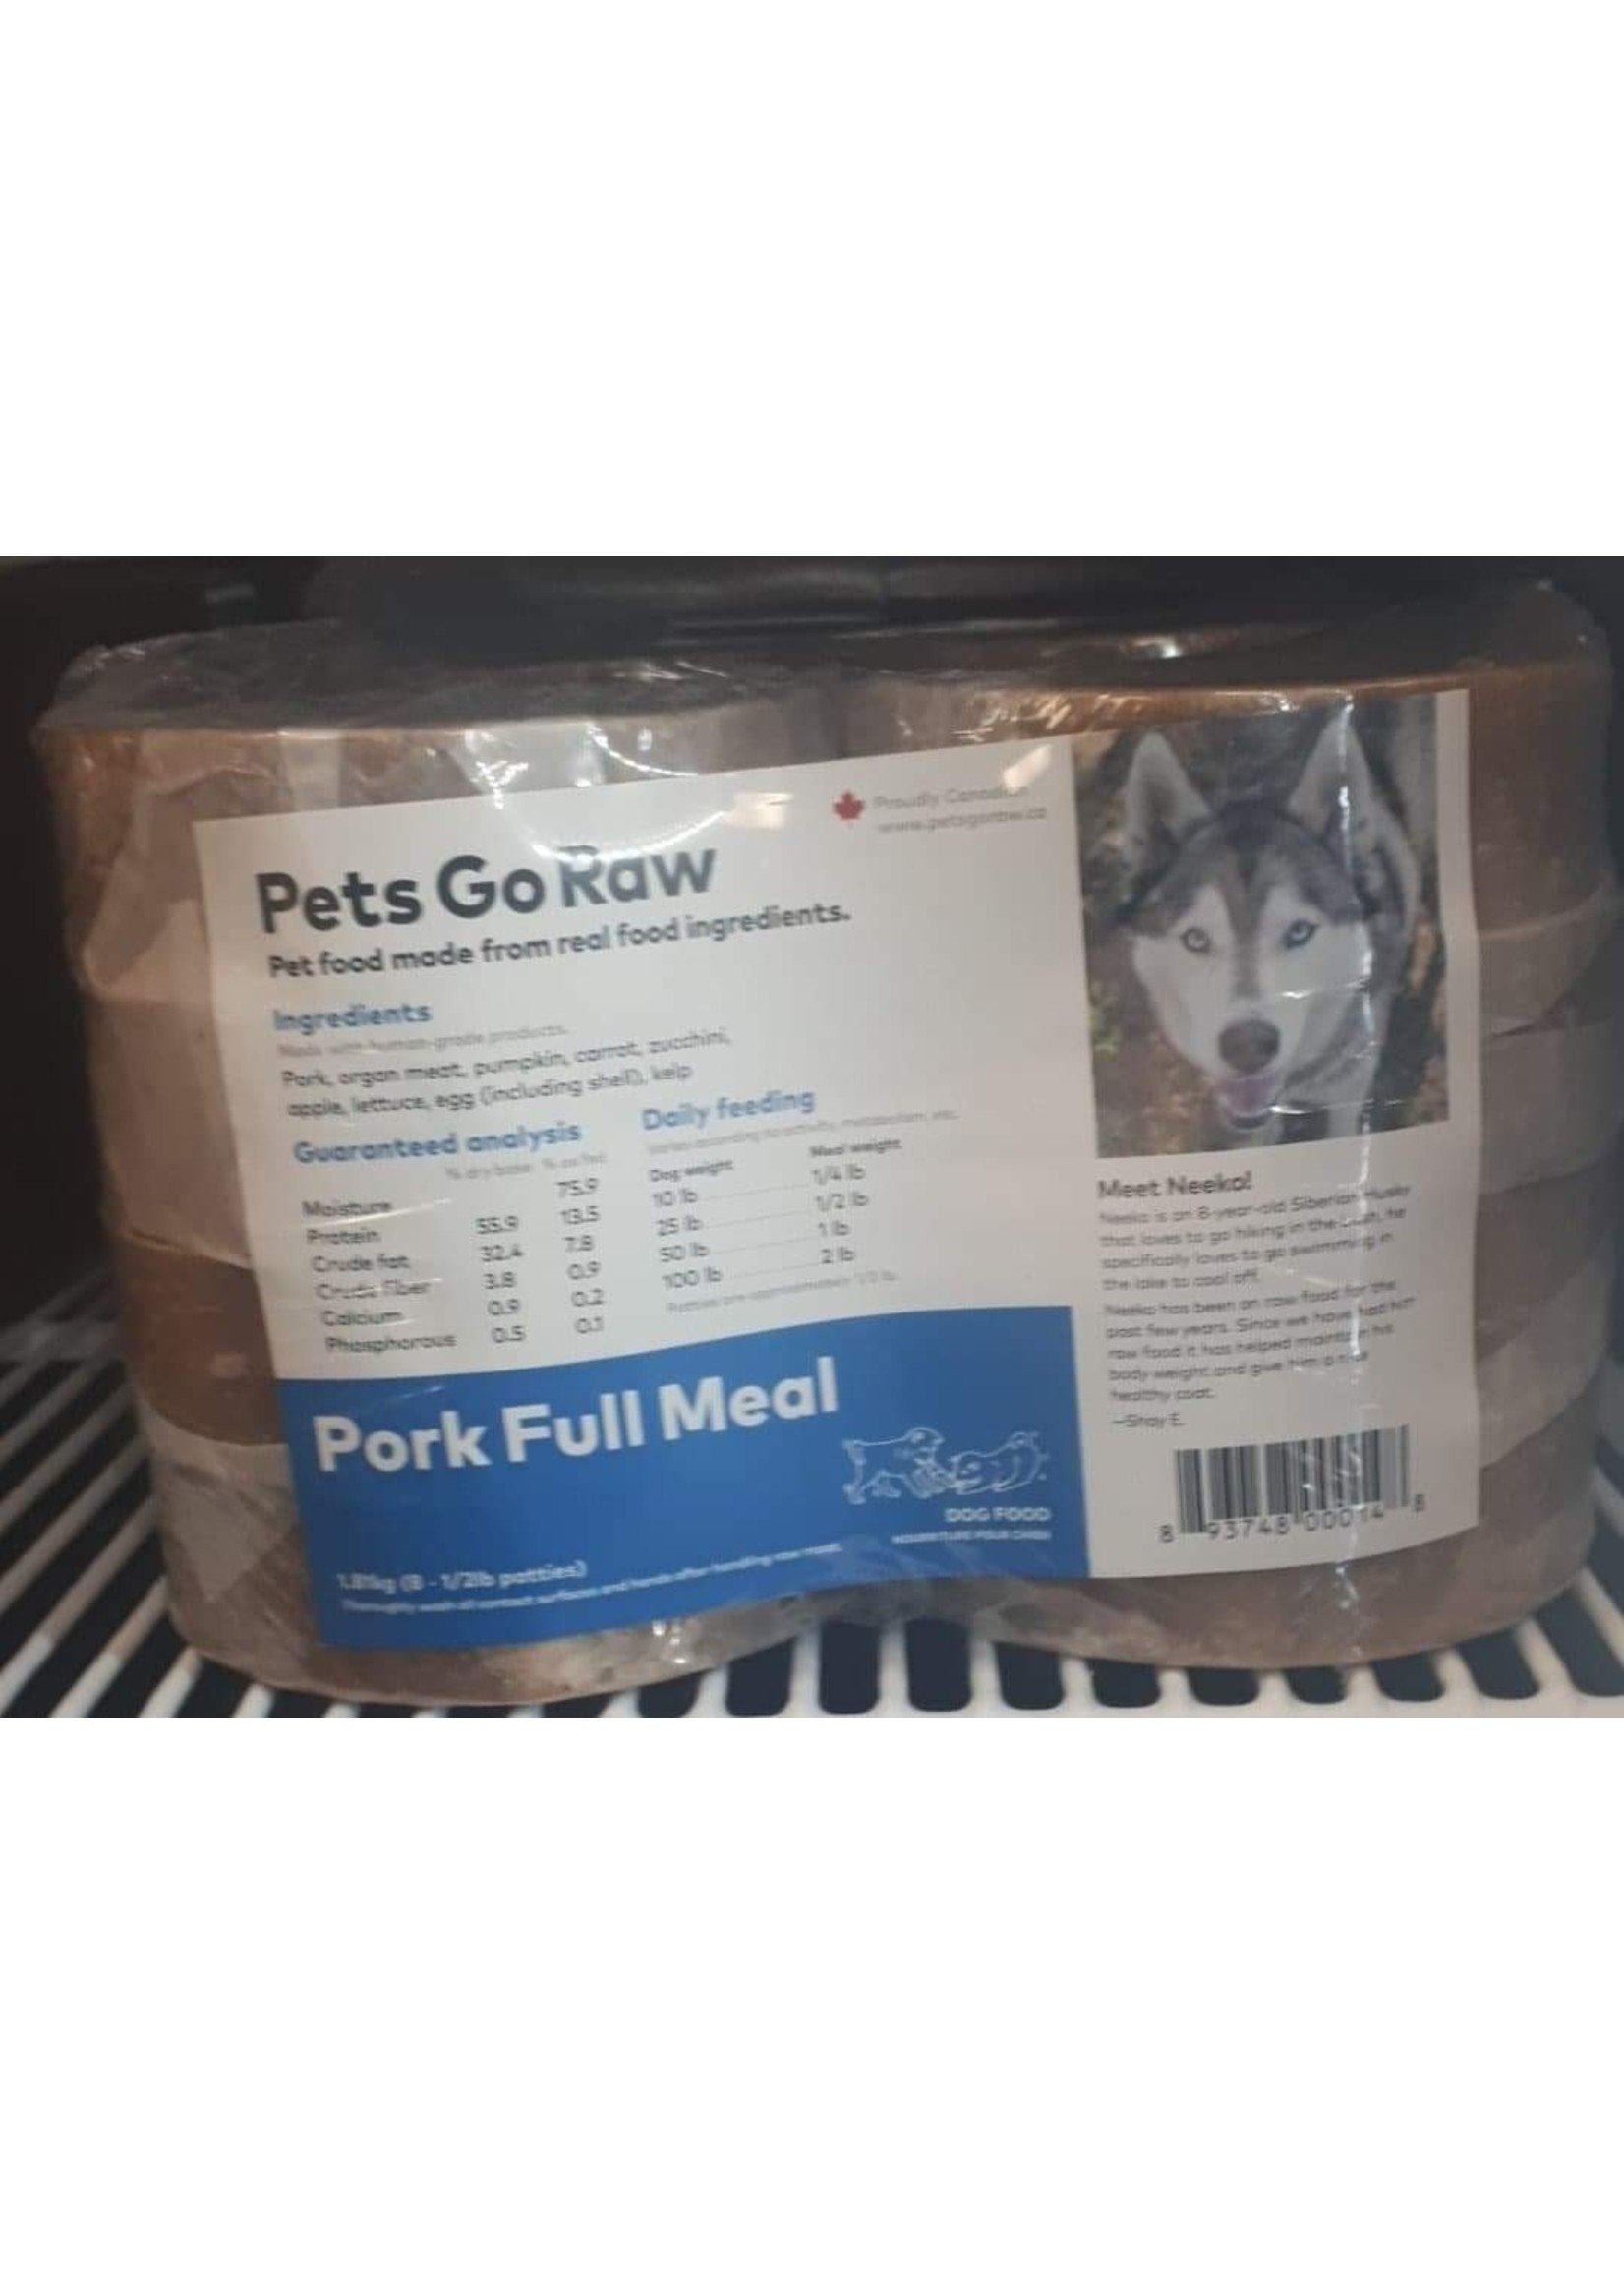 Pets Go Raw Pets Go Raw - Pork Full Meal Dog